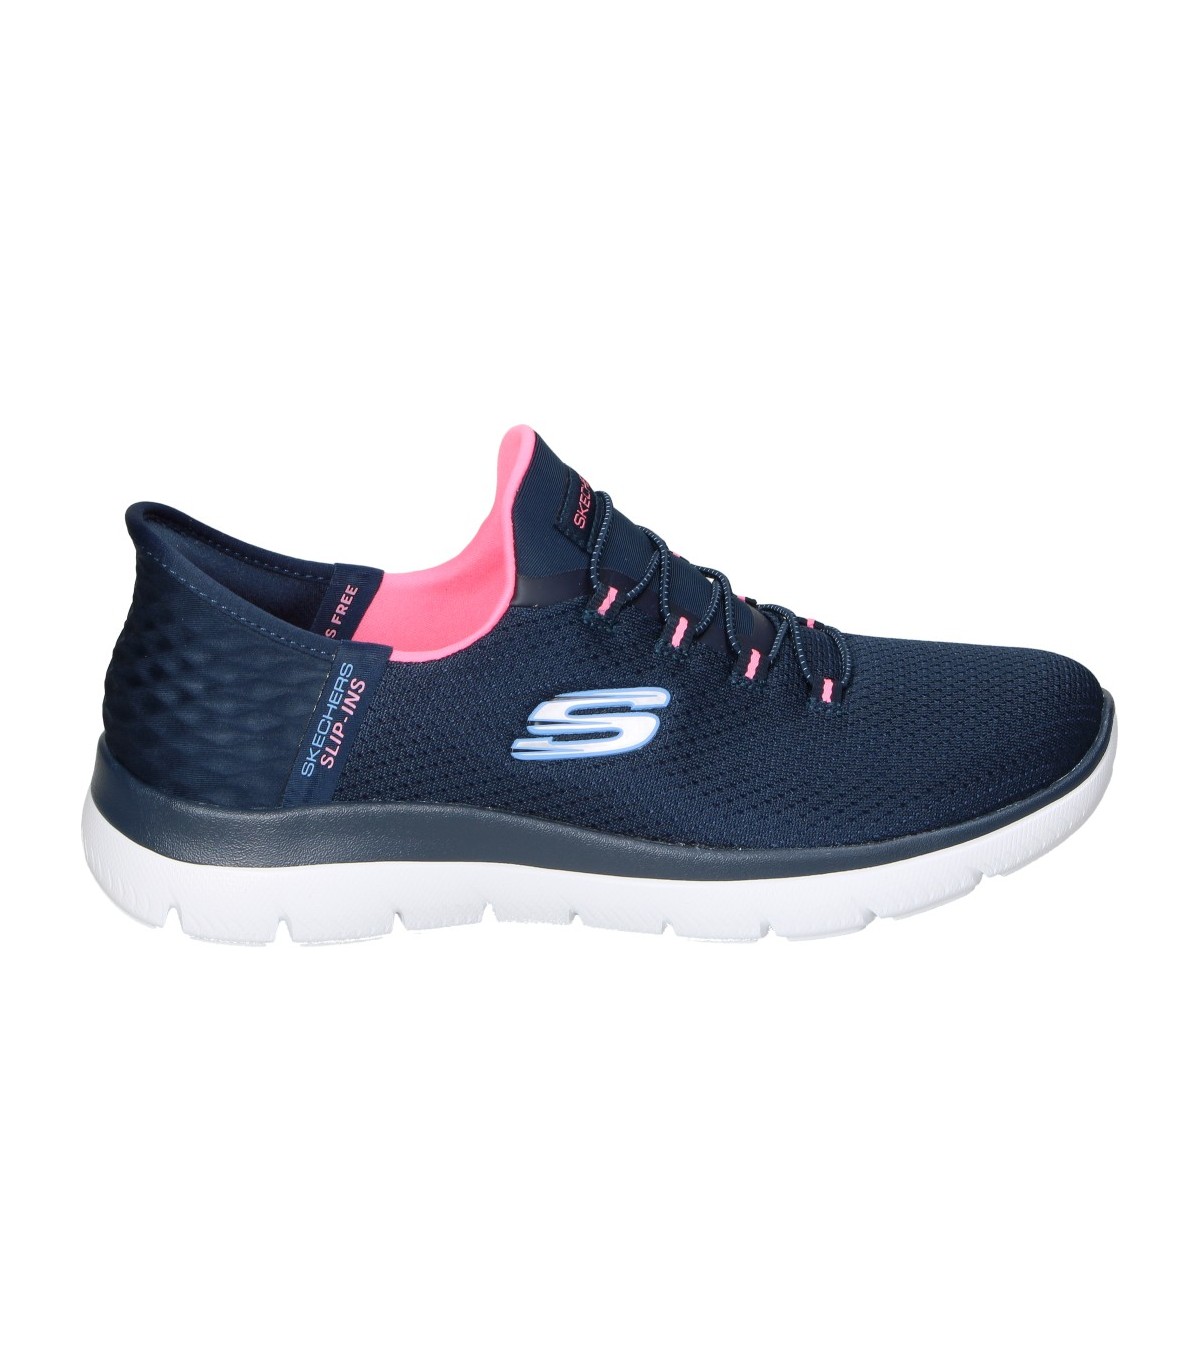 Zapatillas sneaker de mujer SKECHERS 150123-nvpk color azul